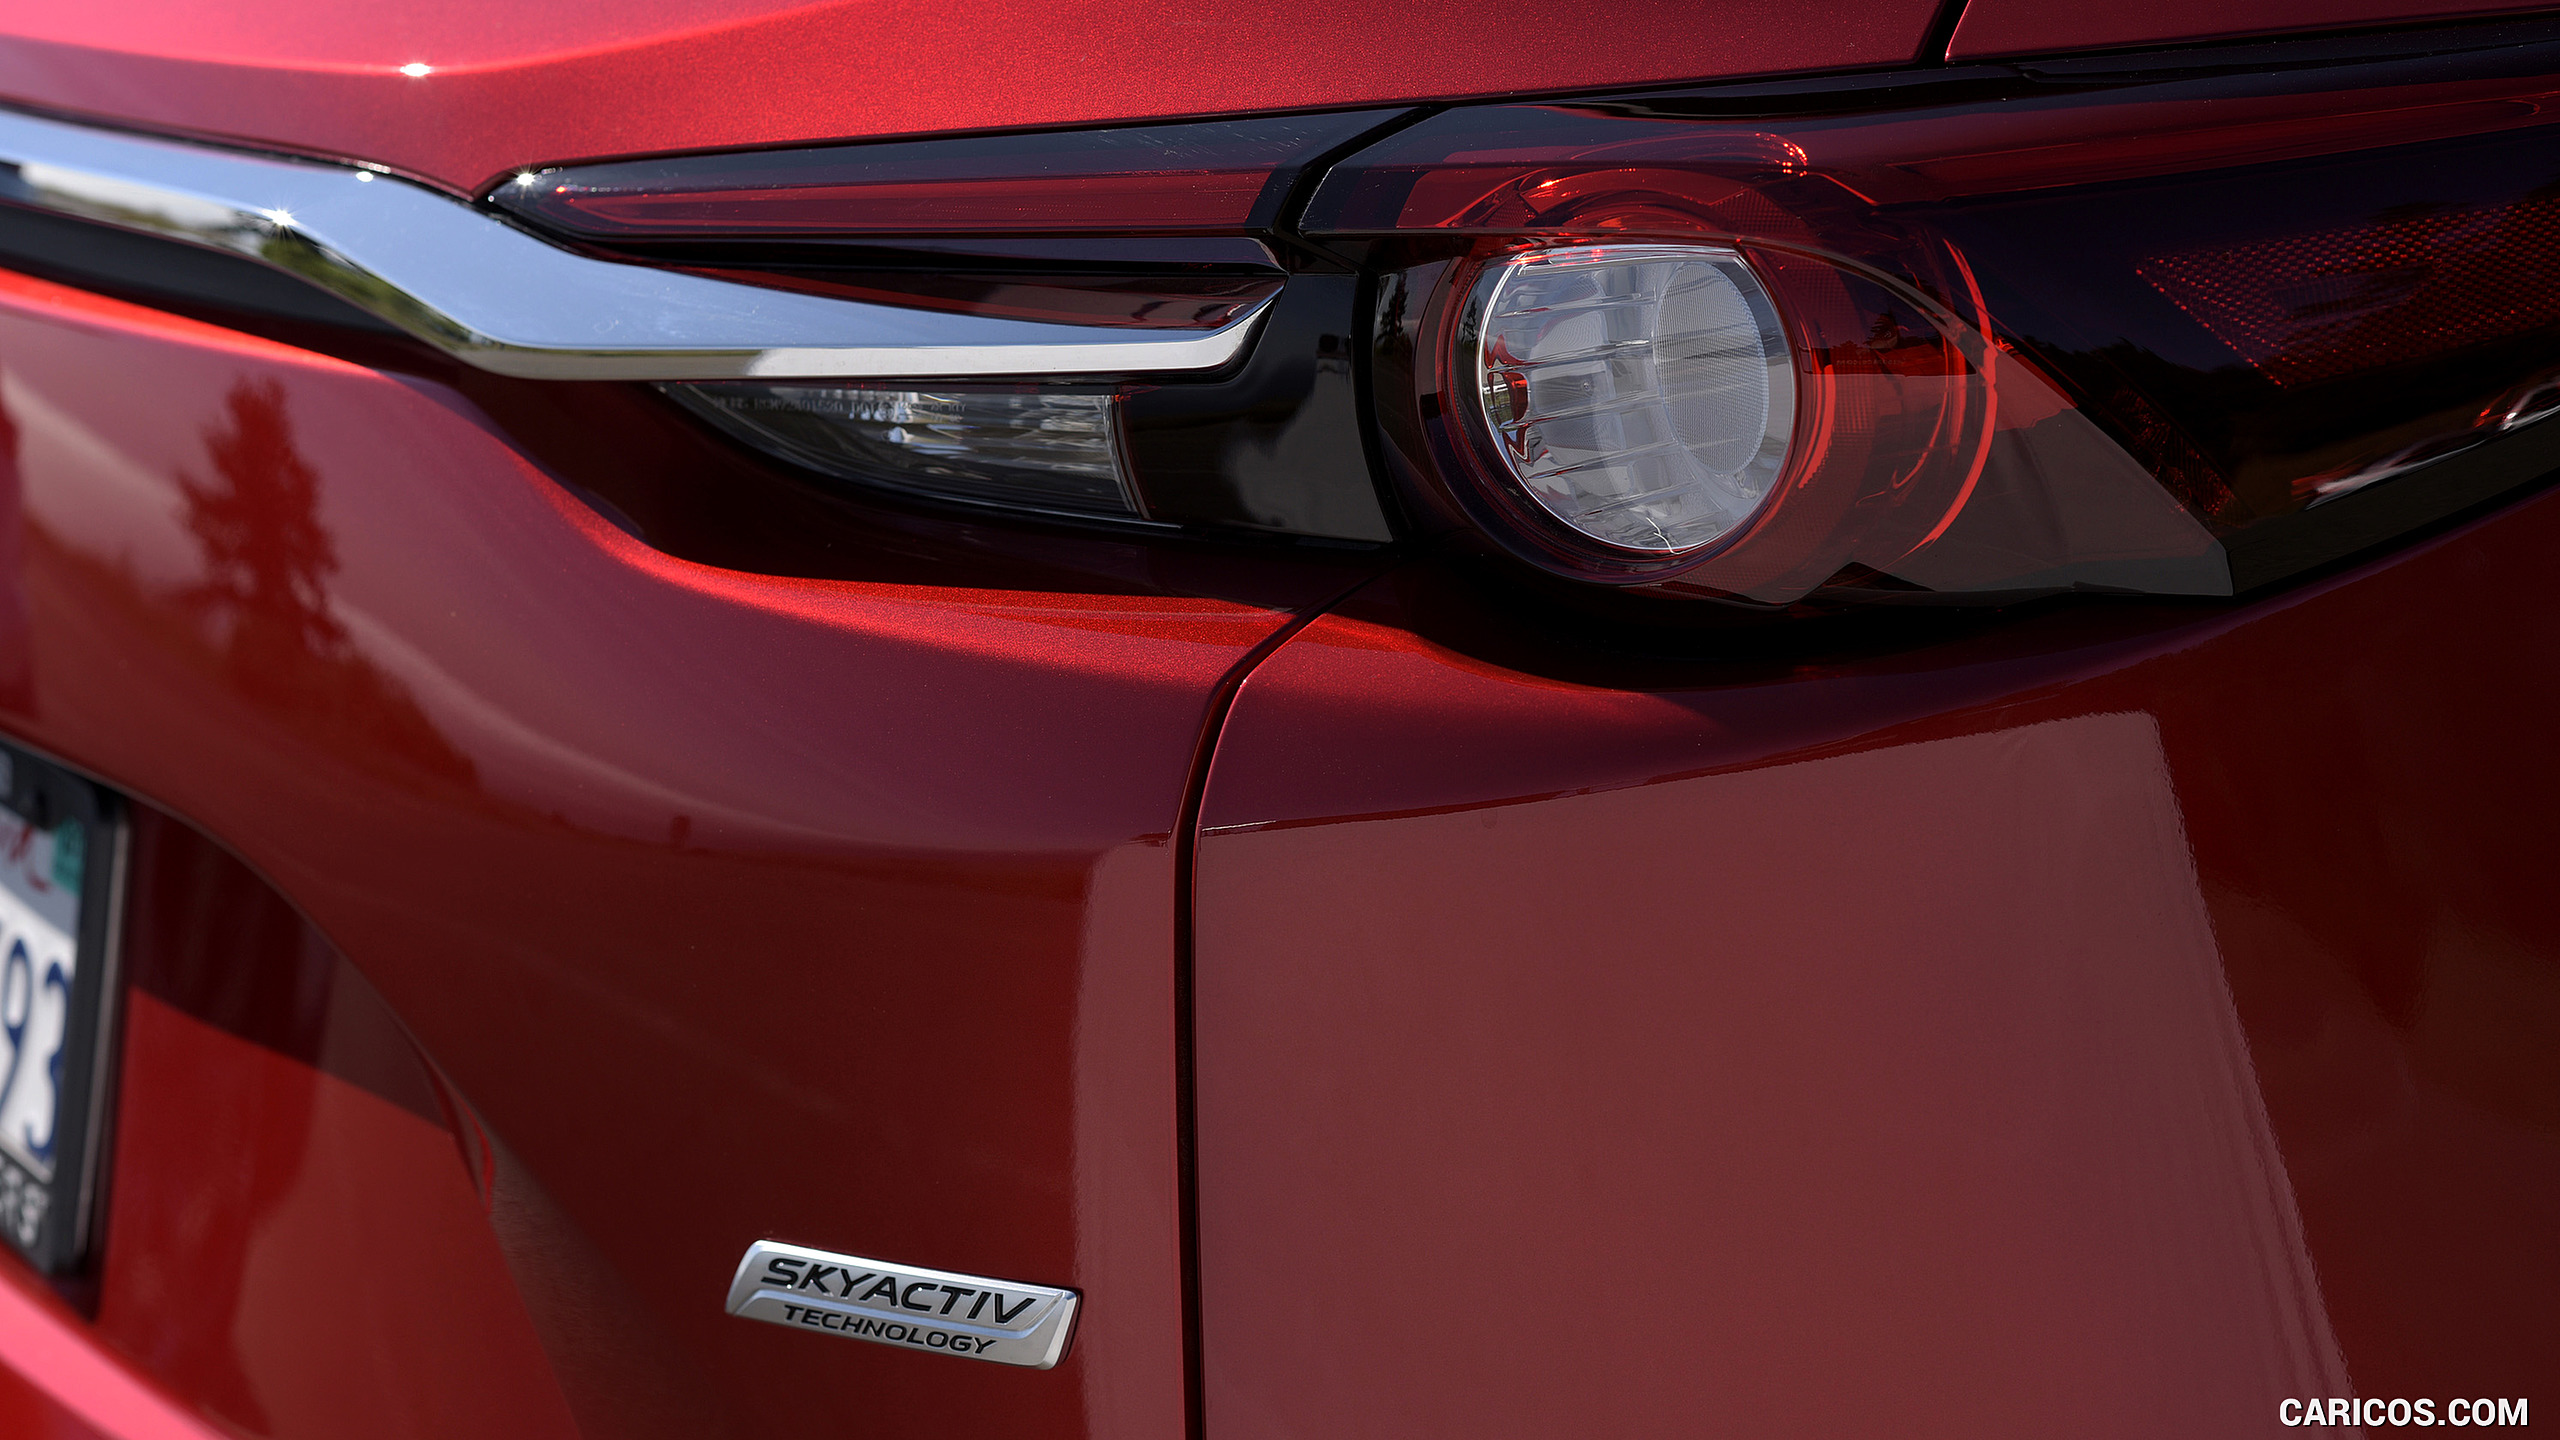 2016 Mazda CX-9 - Tail Light, #47 of 69